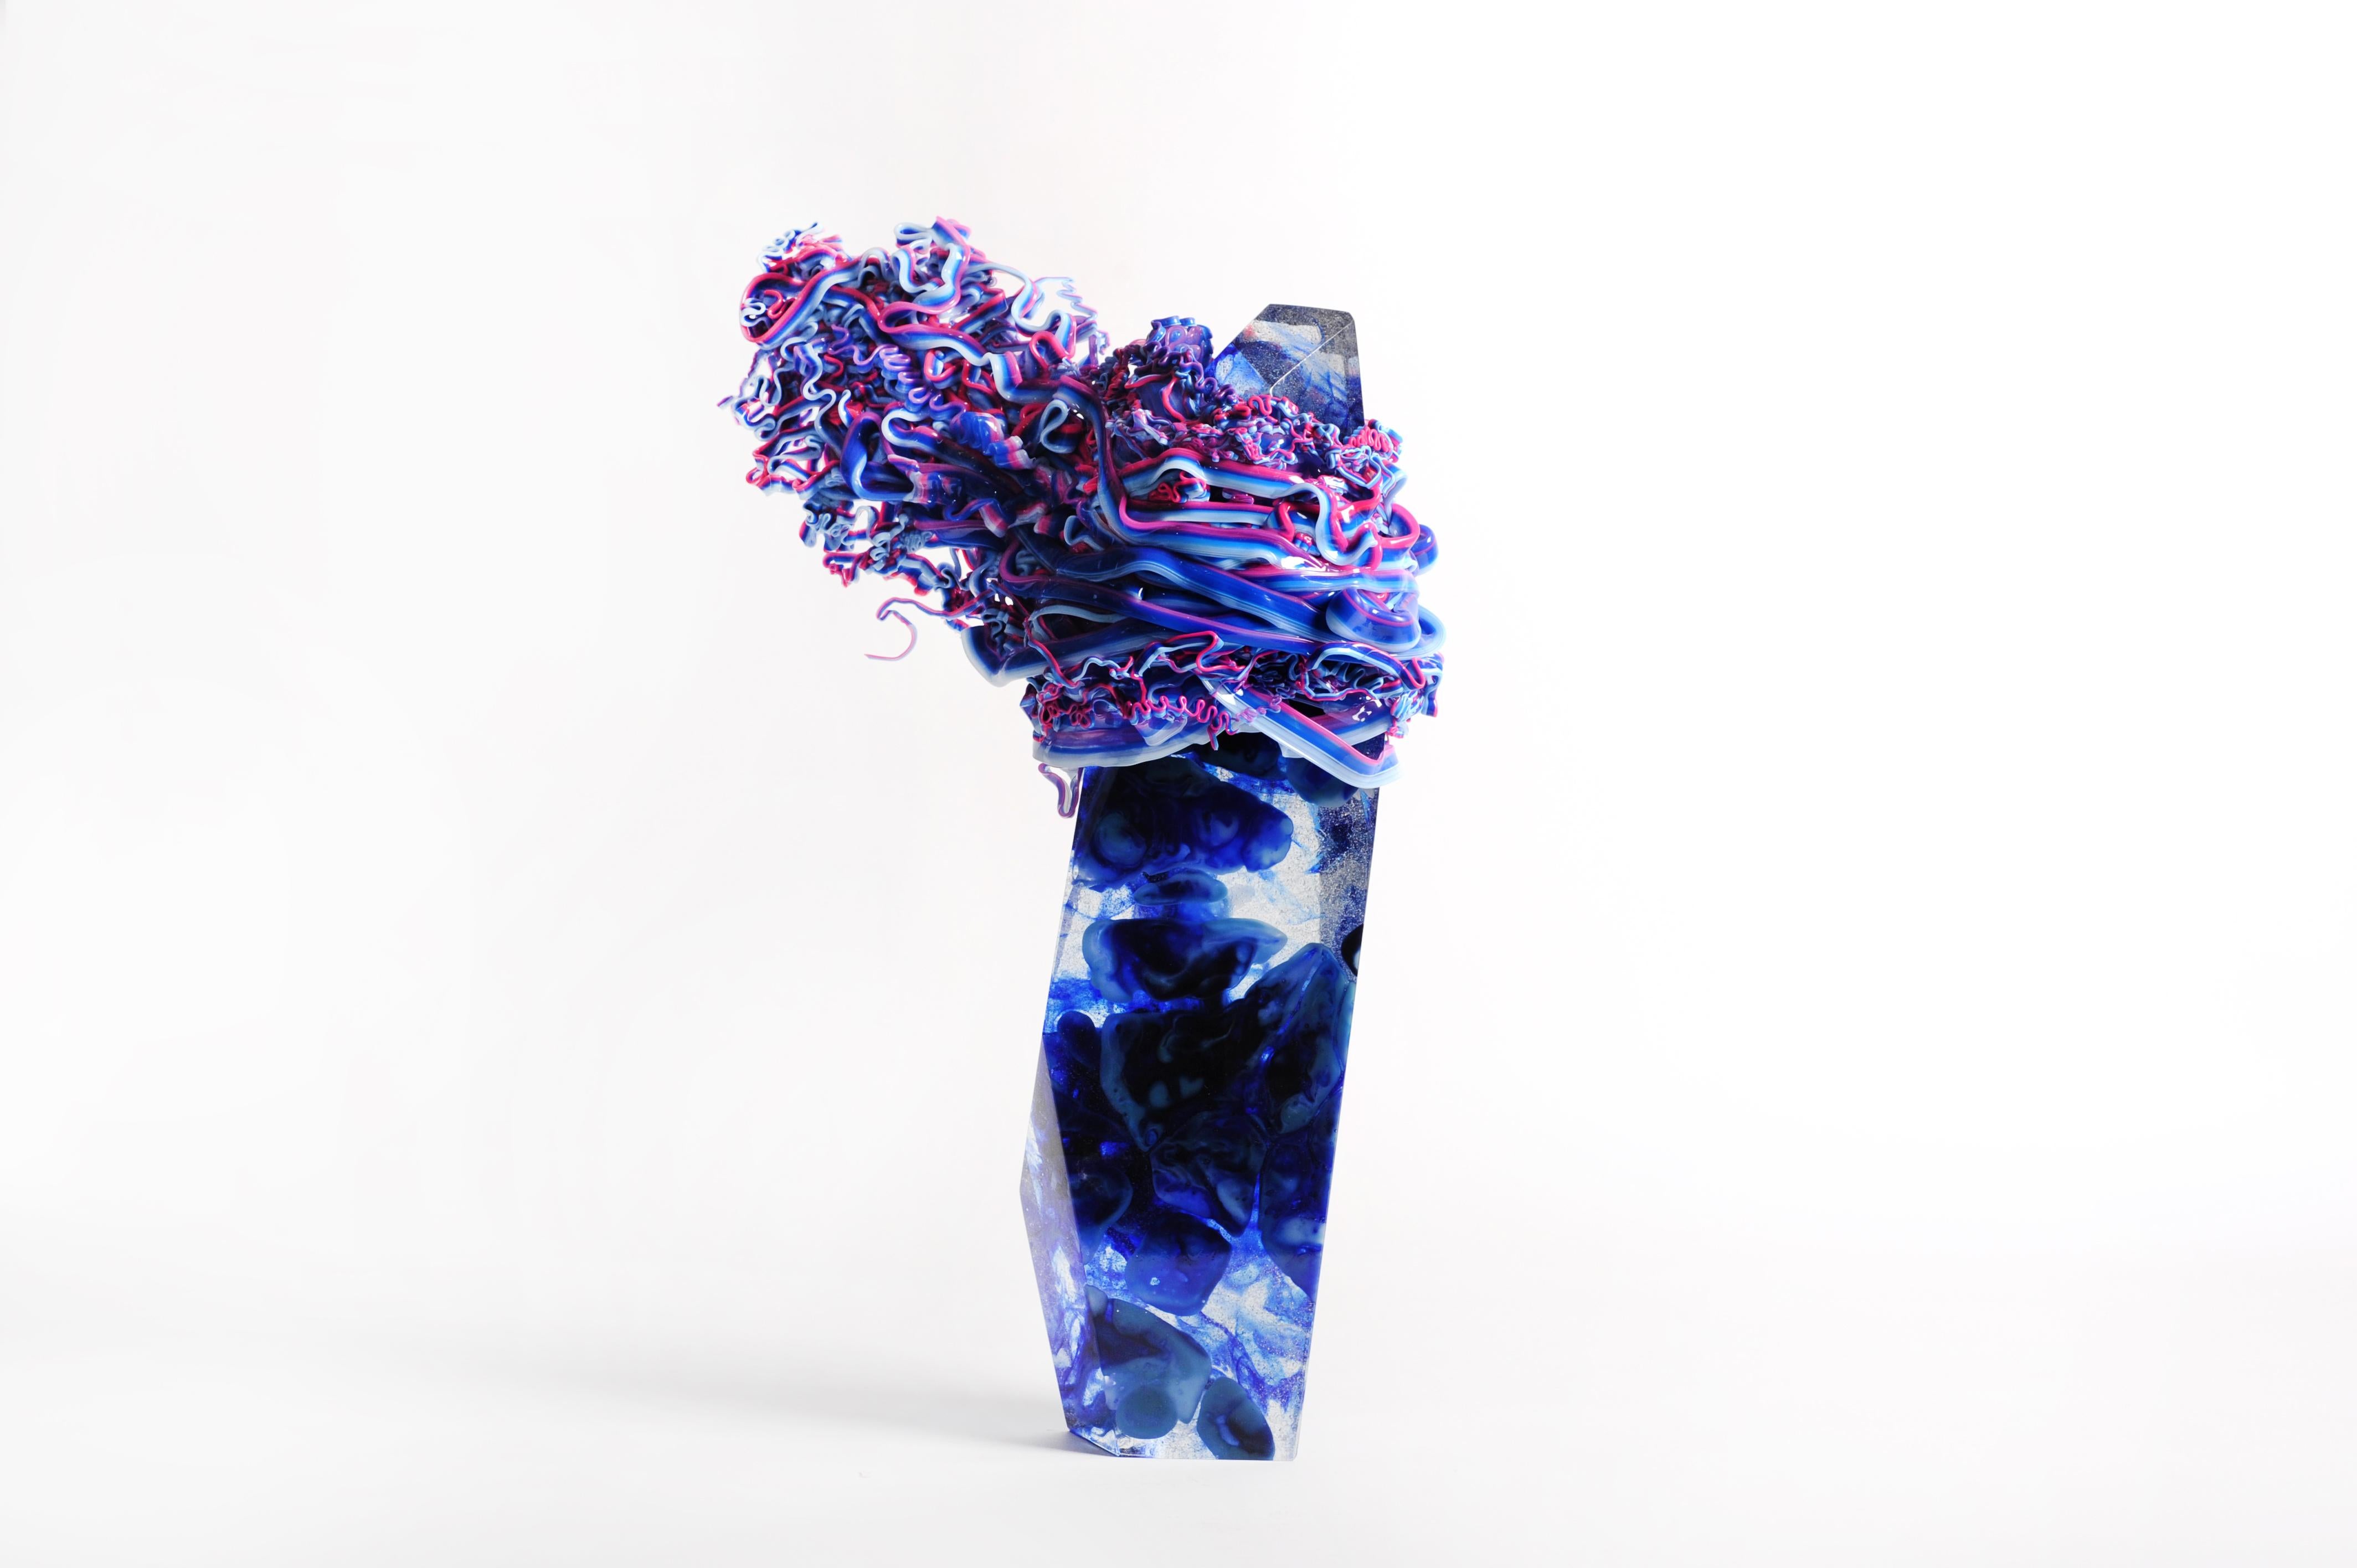 Delibertad-Skulptur aus Glas vs. Plastik-Sammlung (Moderne) im Angebot